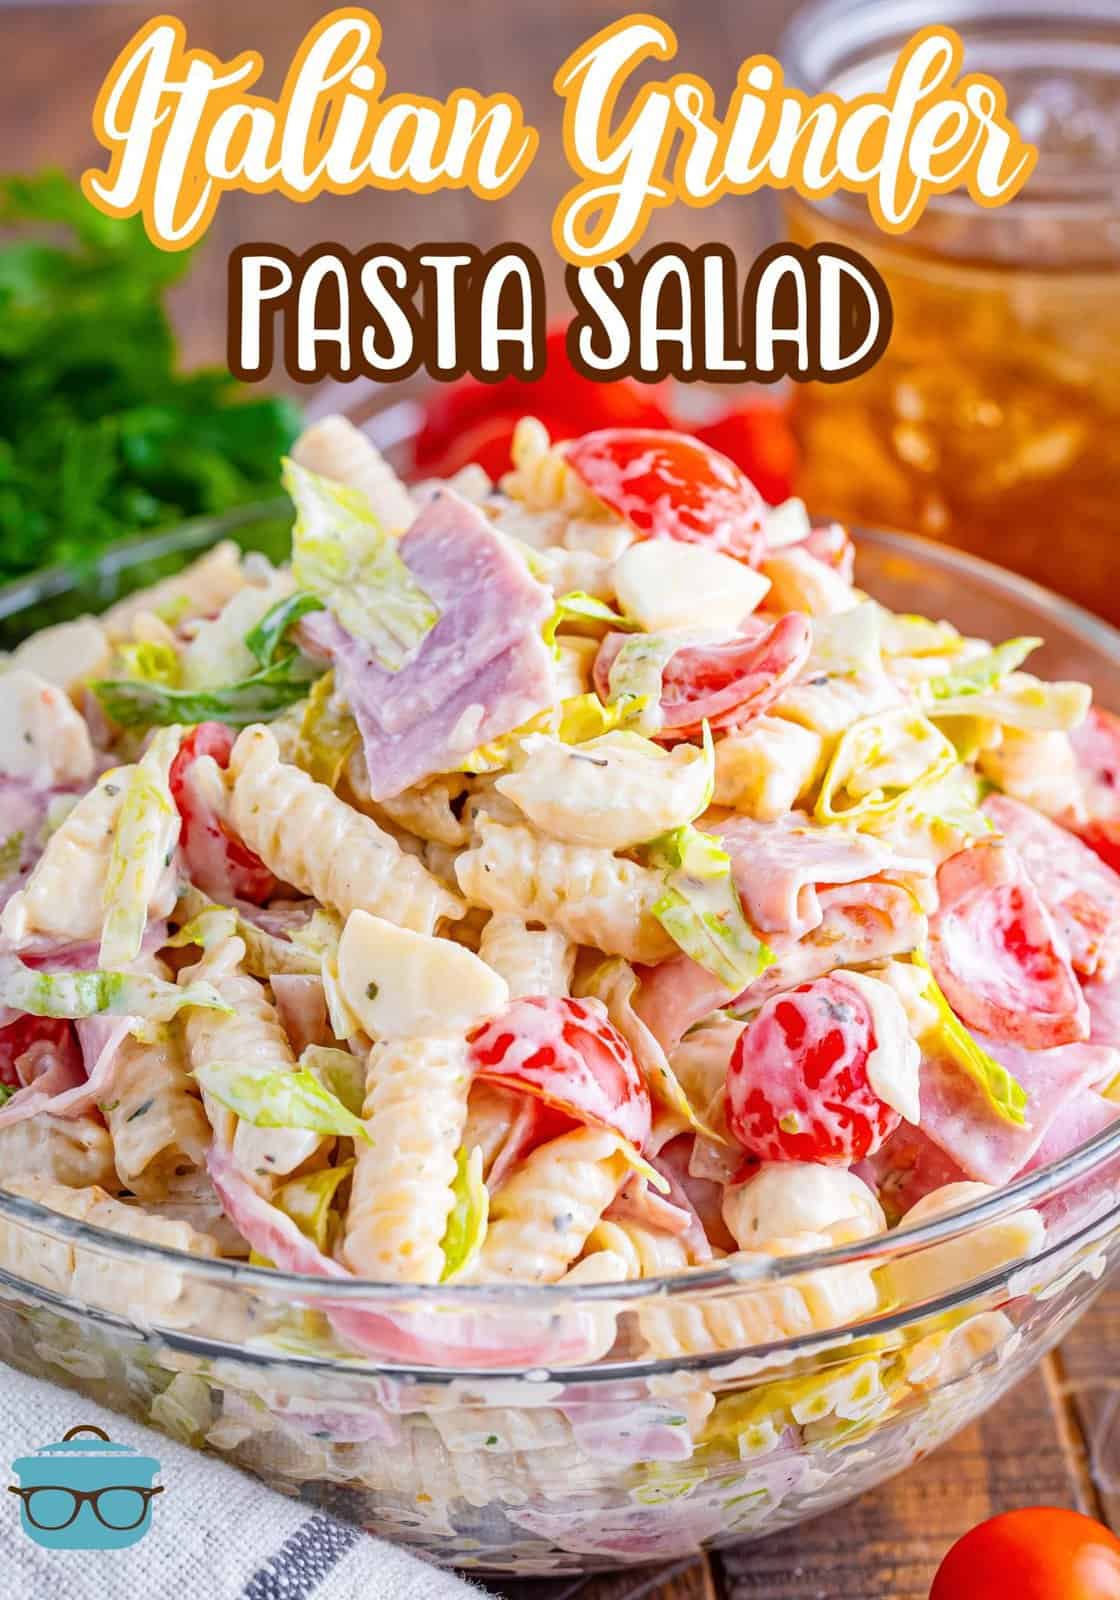 Italian Grinder Pasta Salad